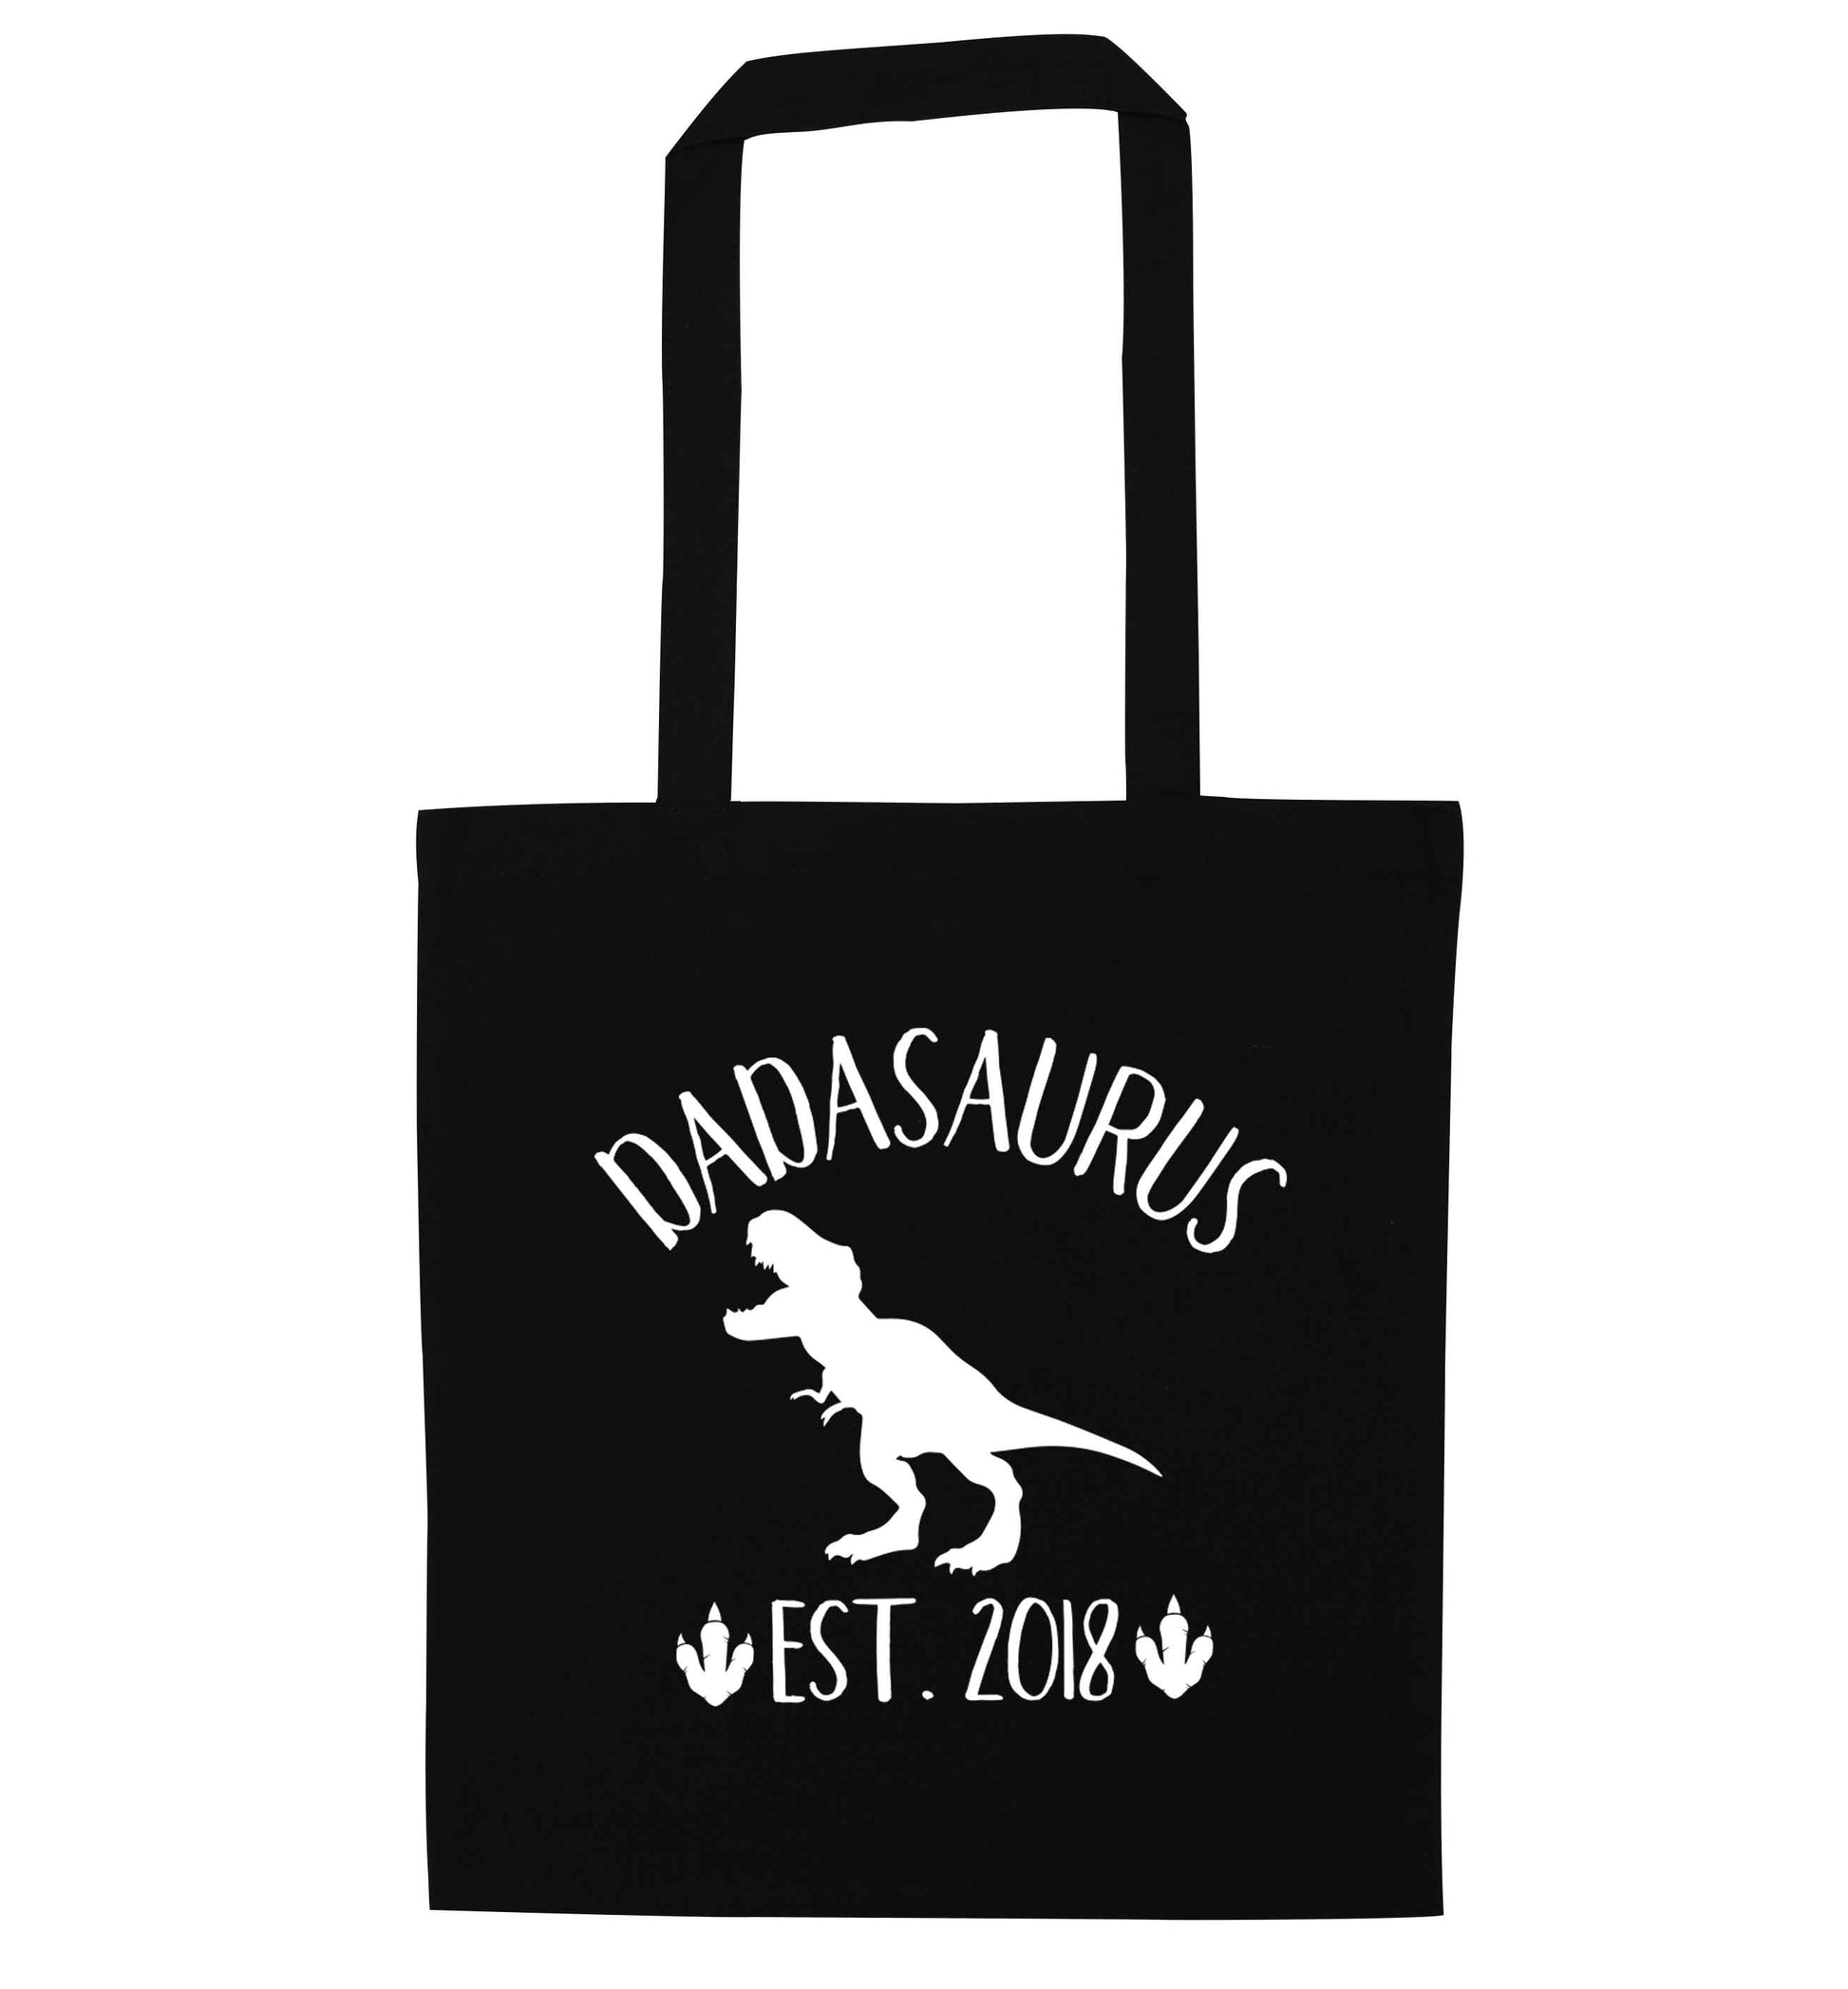 Personalised dadasaurus since (custom date) black tote bag